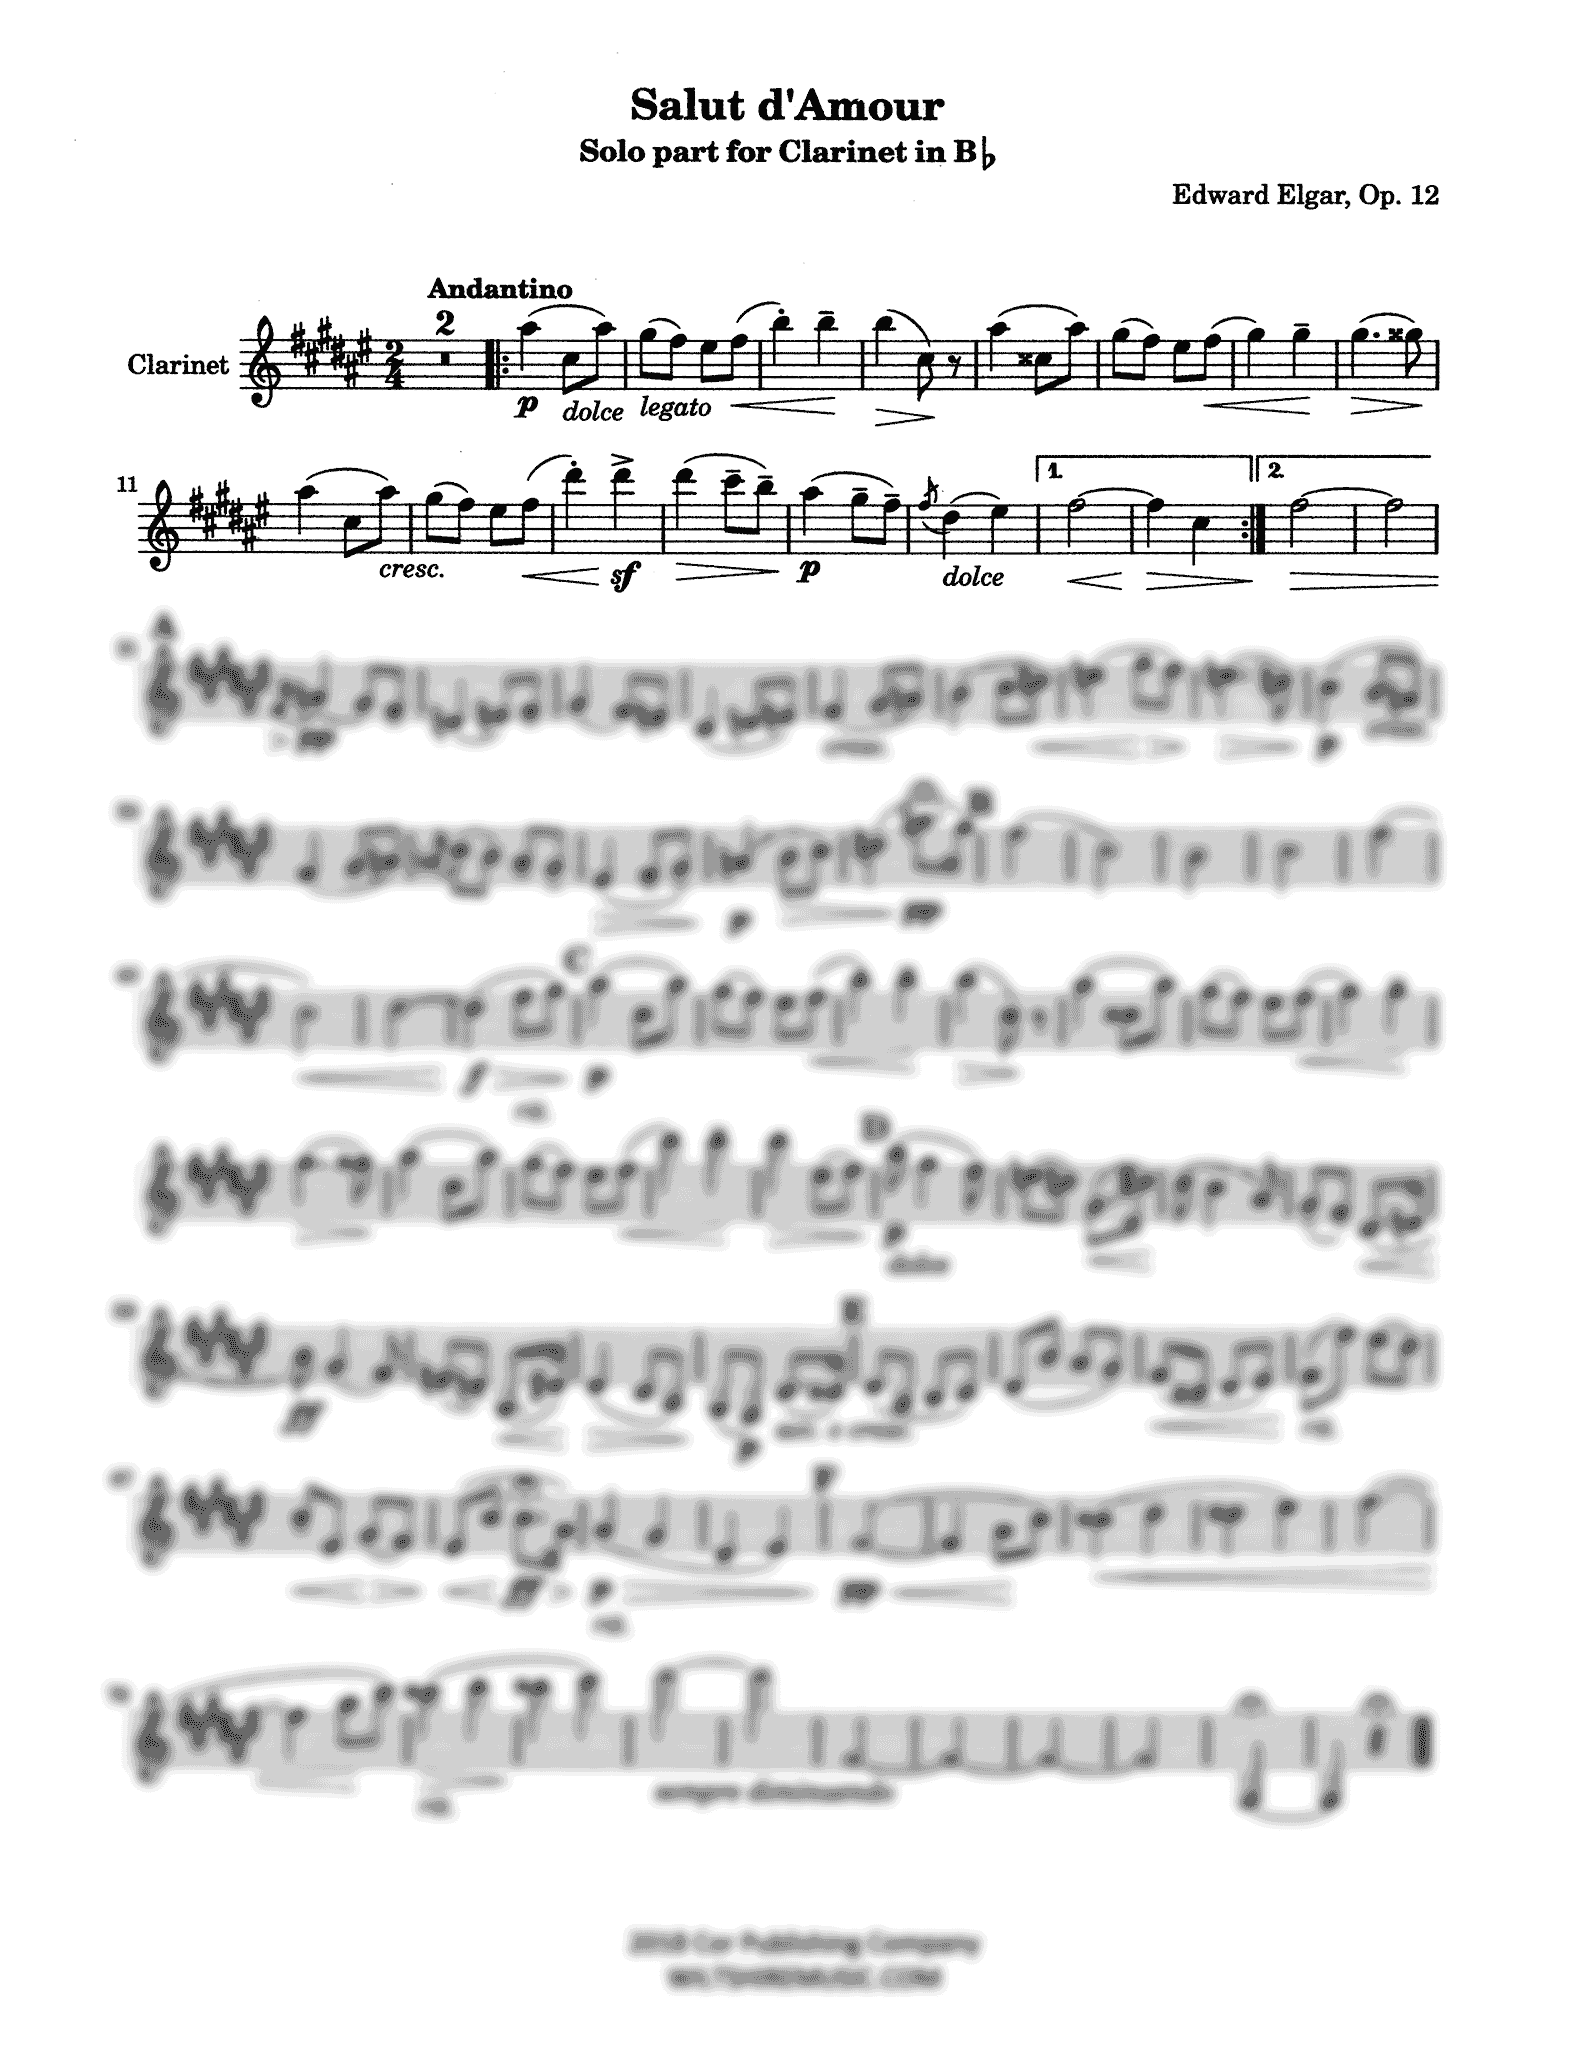 Elgar Salut d’Amour clarinet and piano arrangement solo part